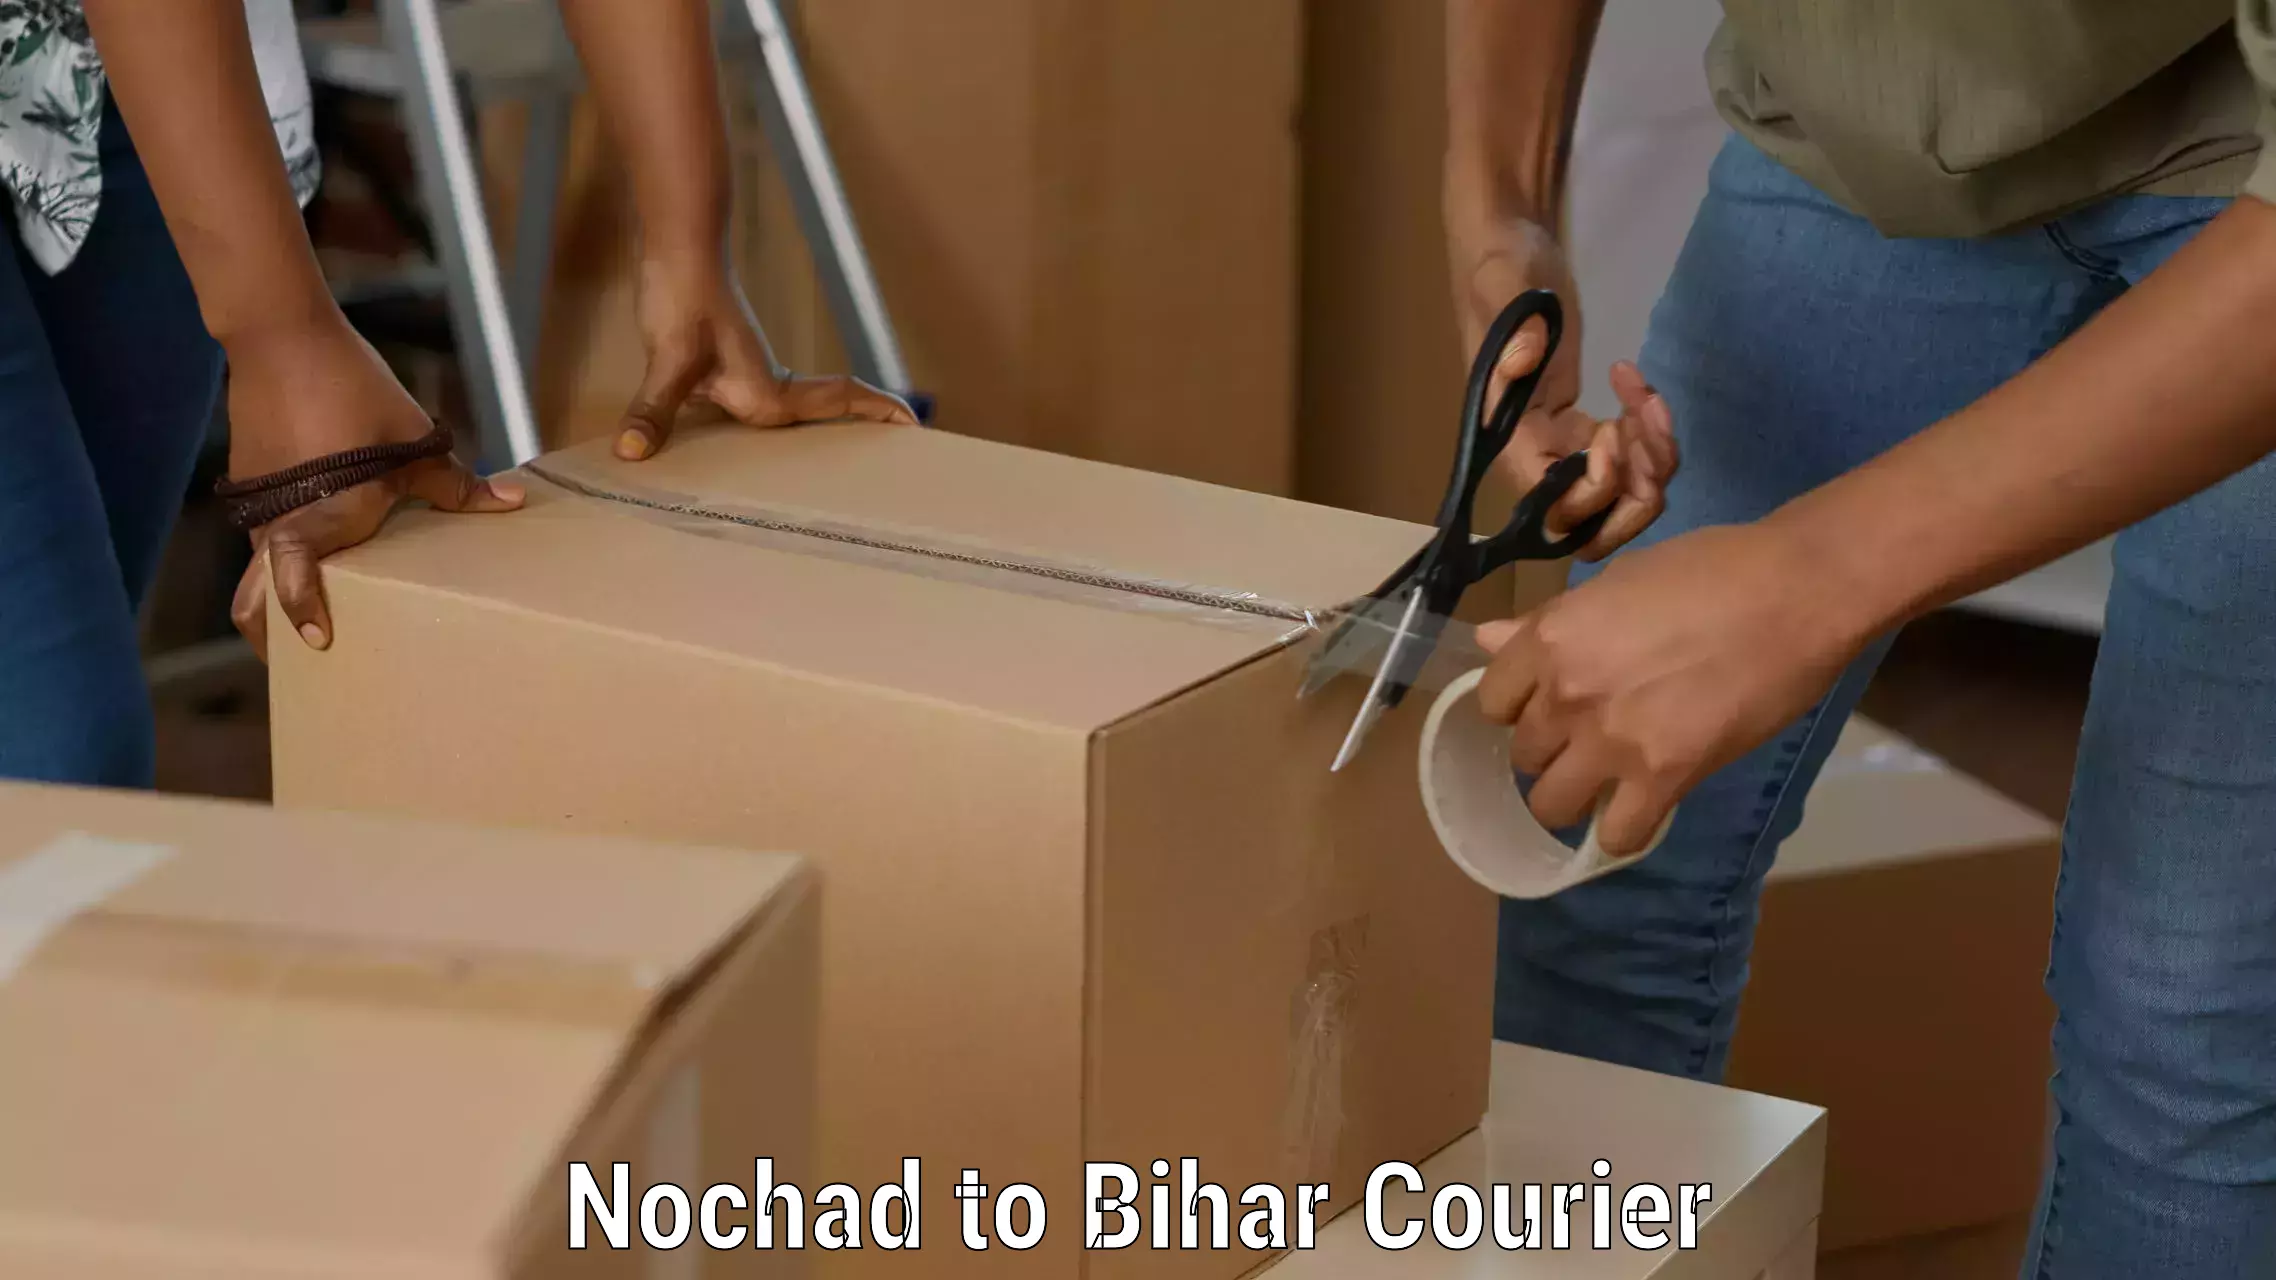 Local delivery service Nochad to Bihar